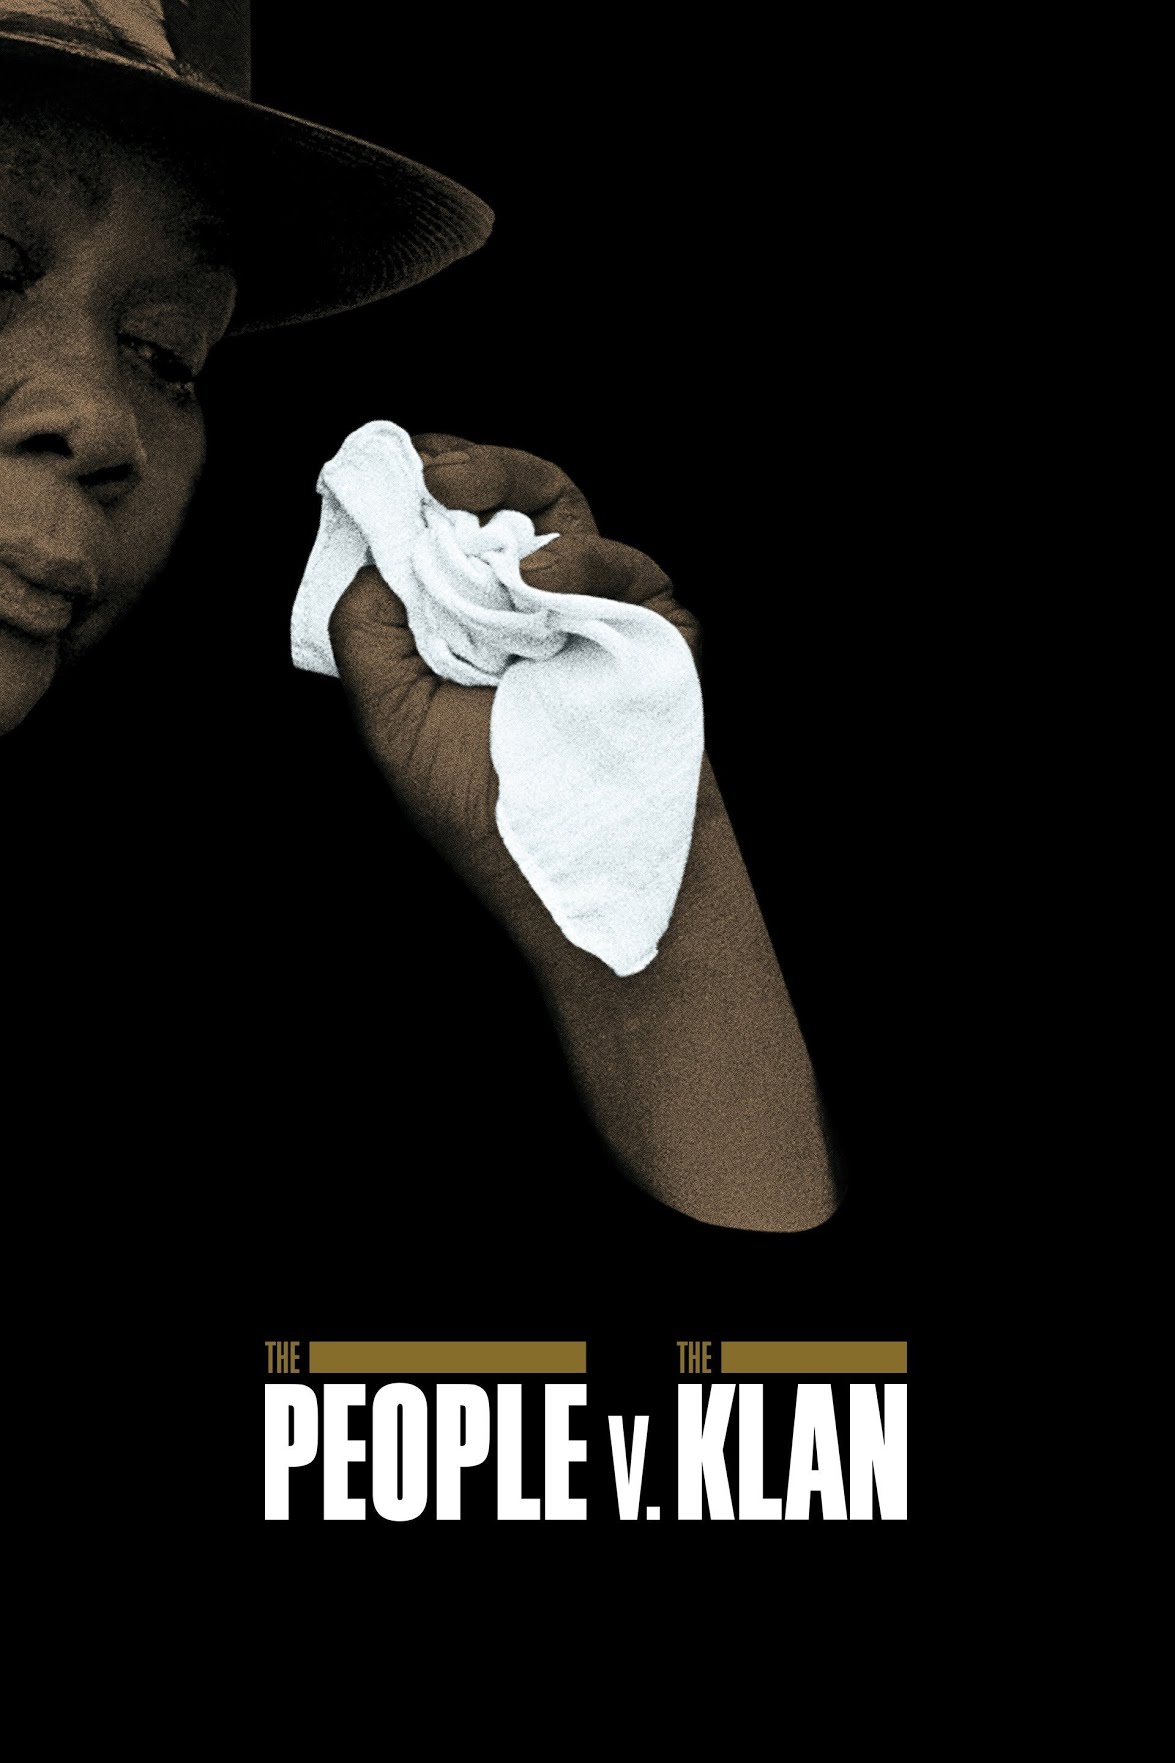 The People vs the Klan